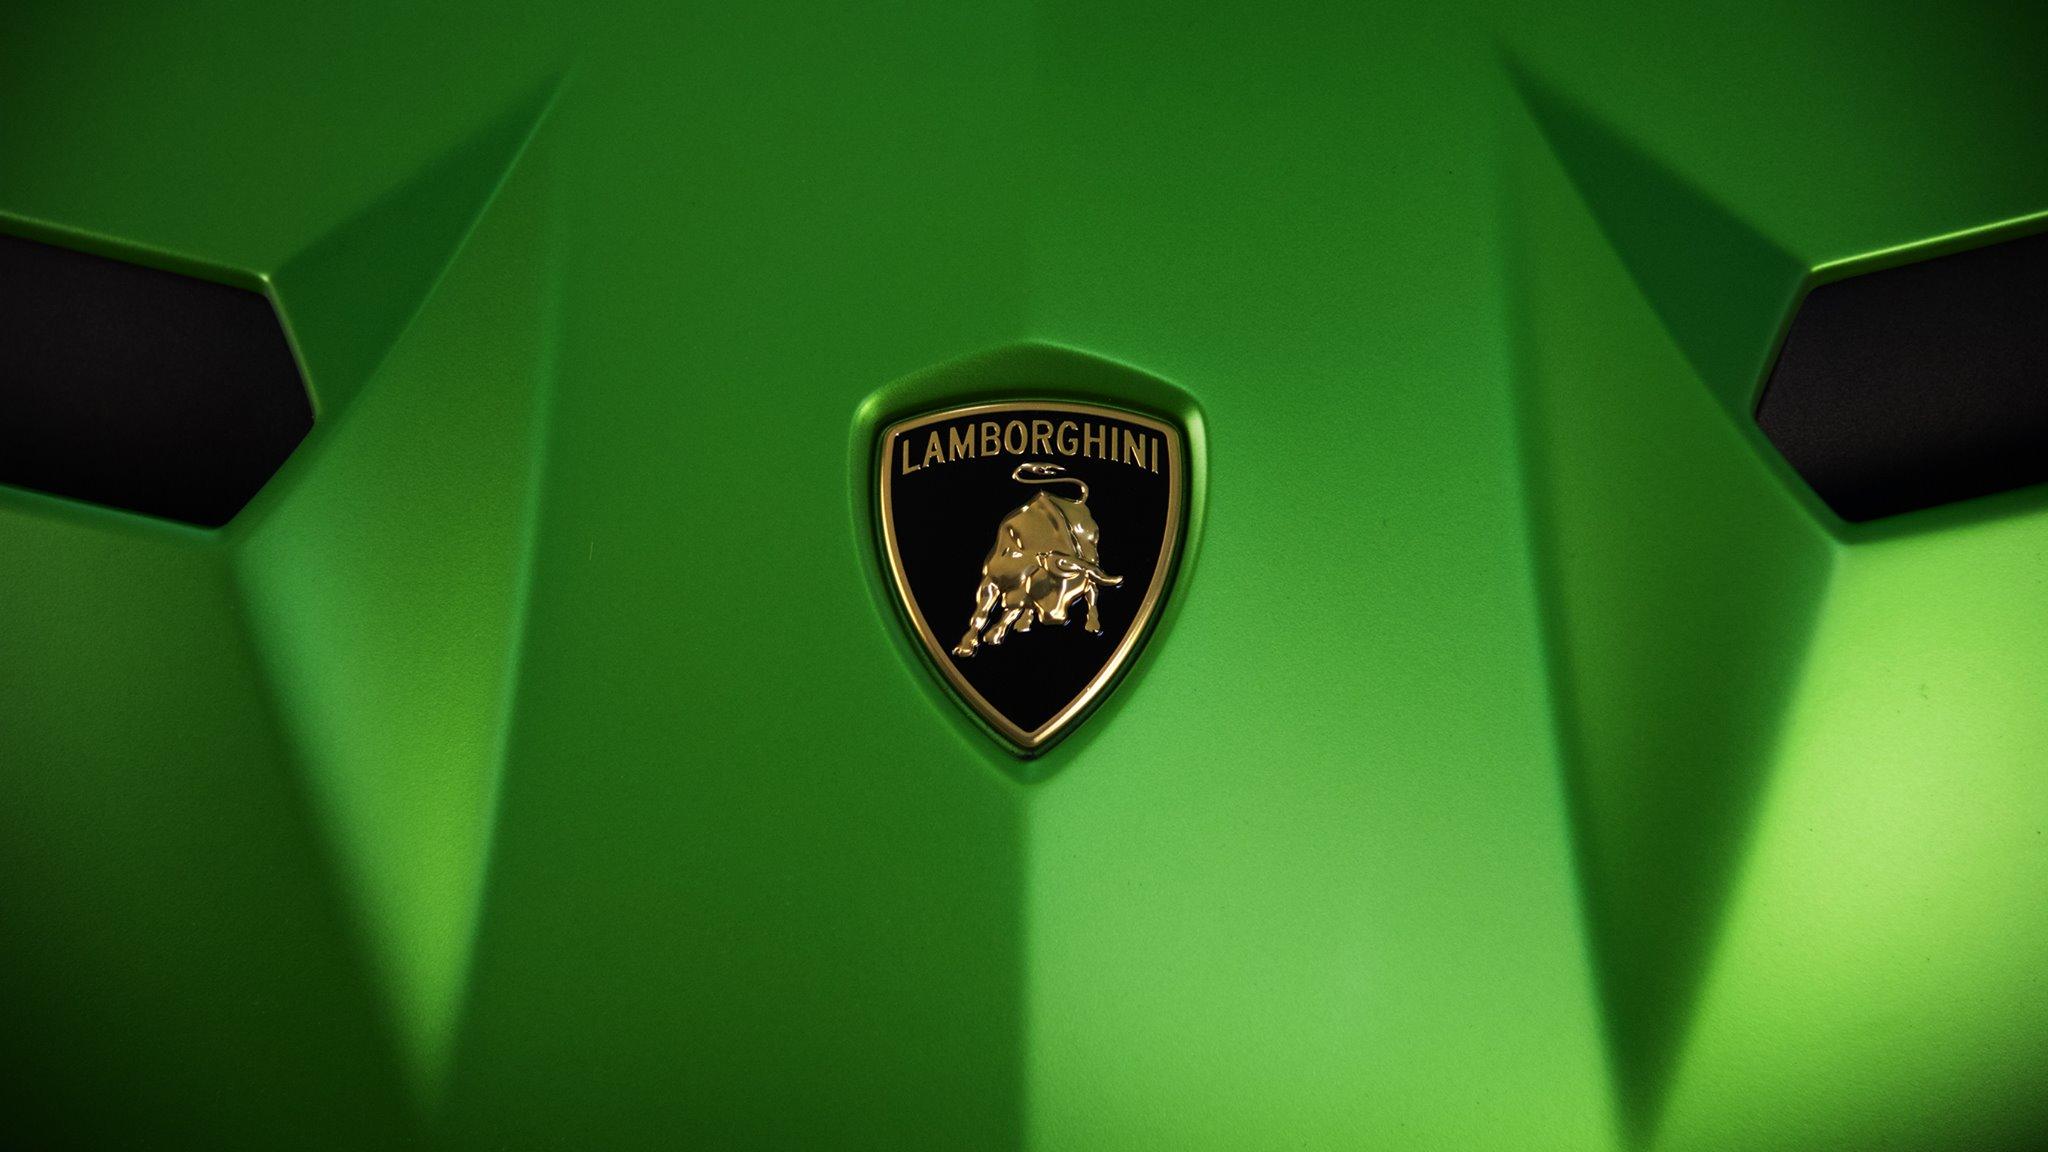 Lamborghini Aventador SVJ Teaser Photo Reveals Nostrils